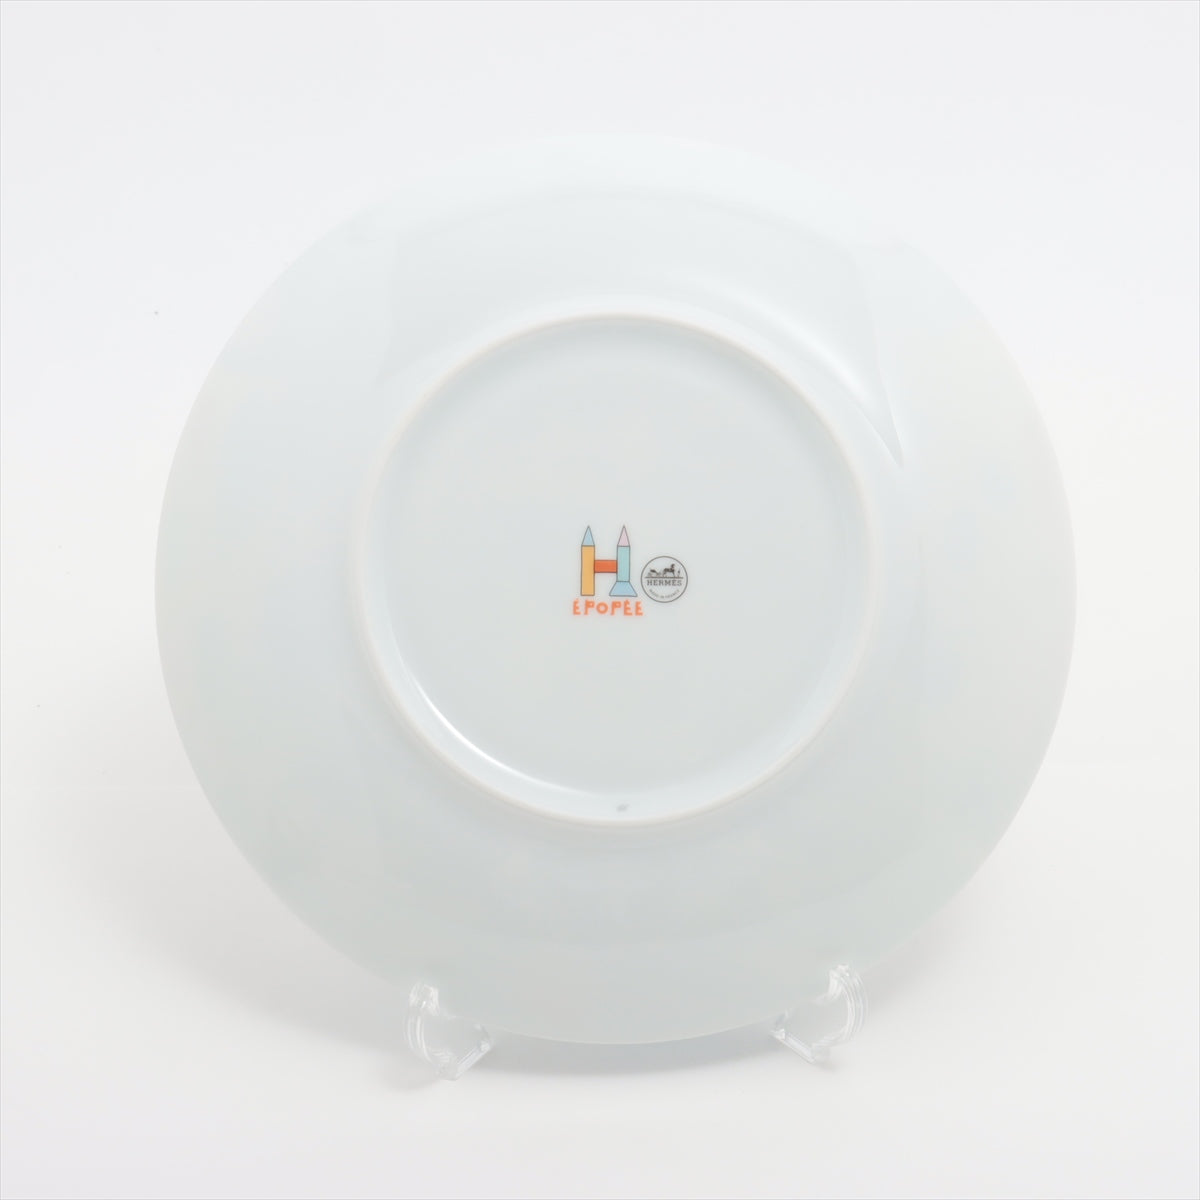 Hermès Epope Other Ceramic Multicolor 4-piece dinnerware set